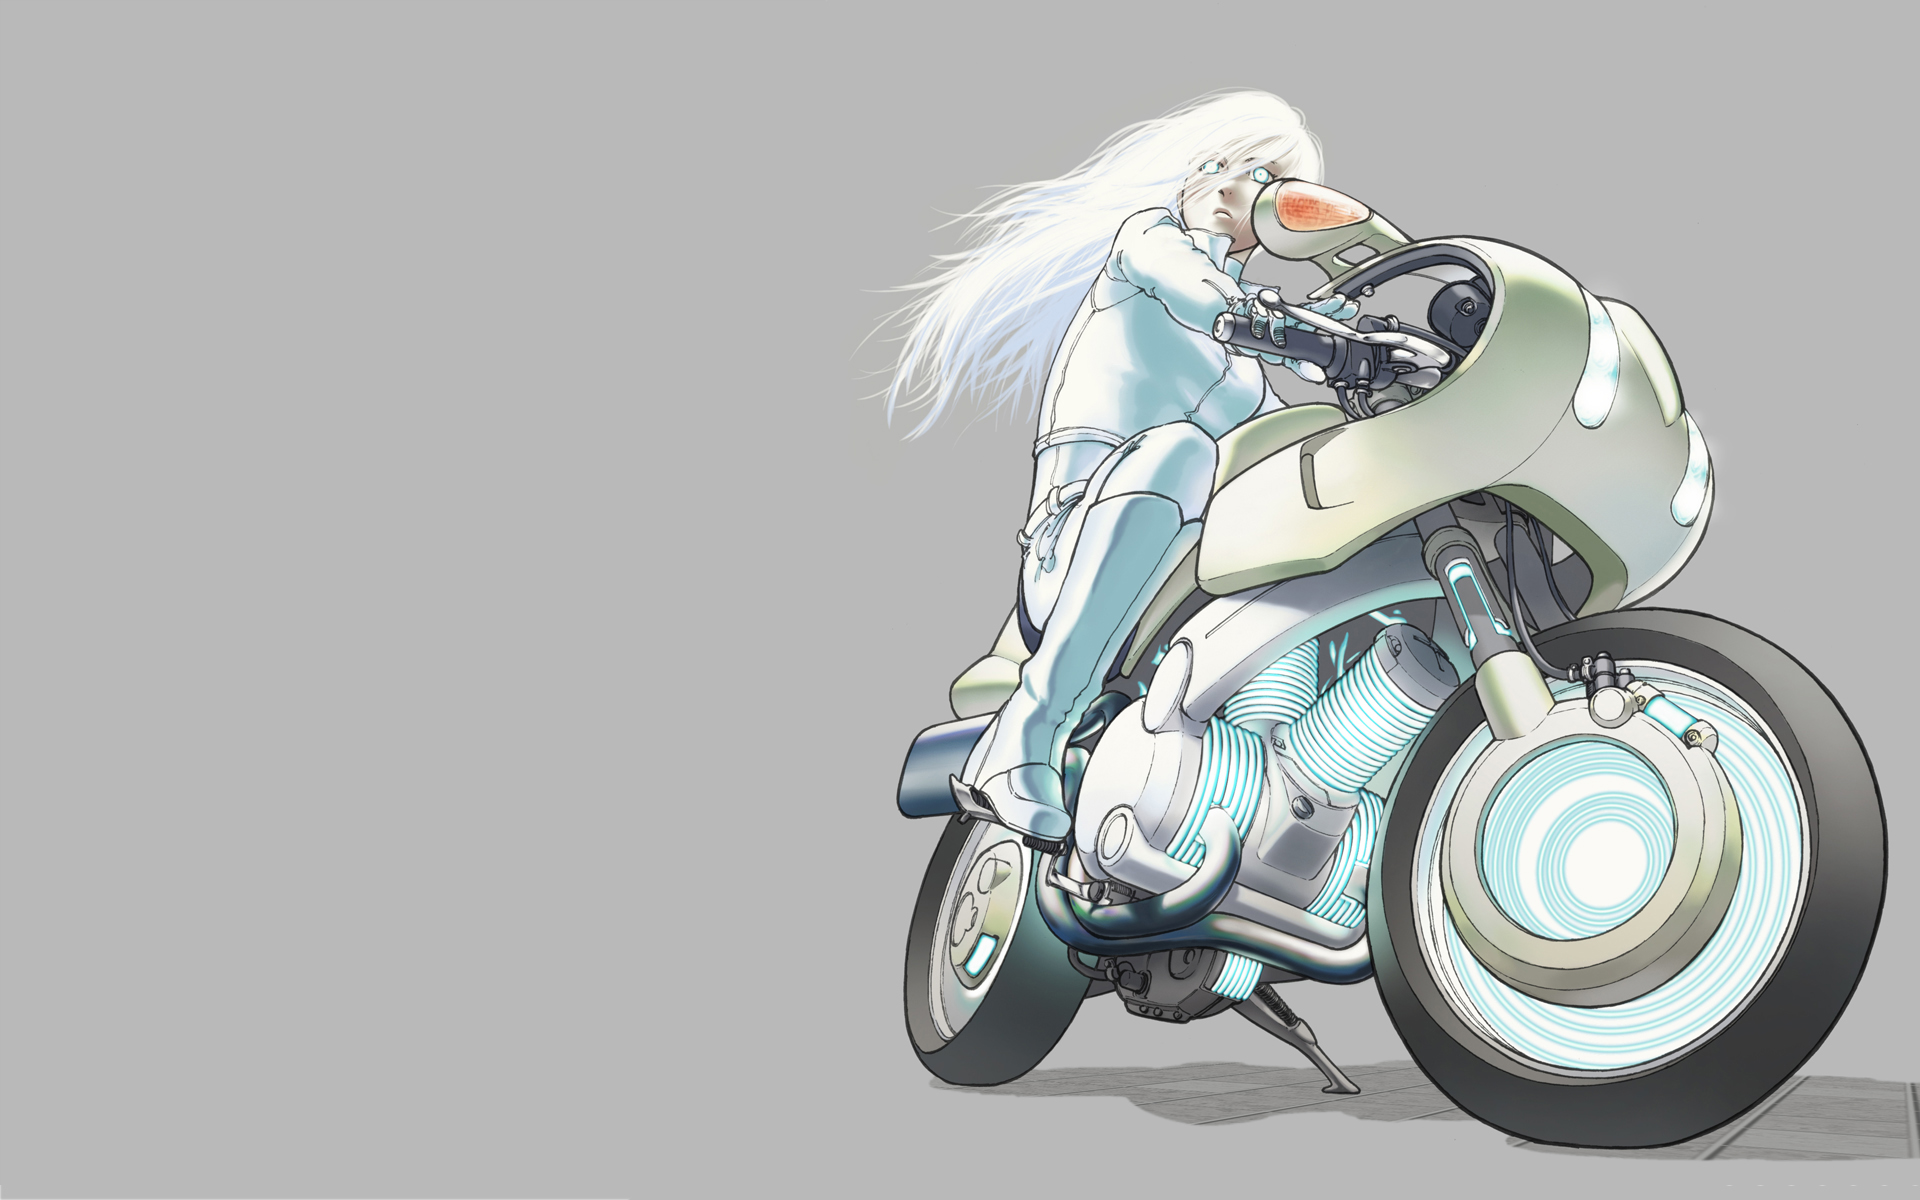 motorbikes, simple background - desktop wallpaper